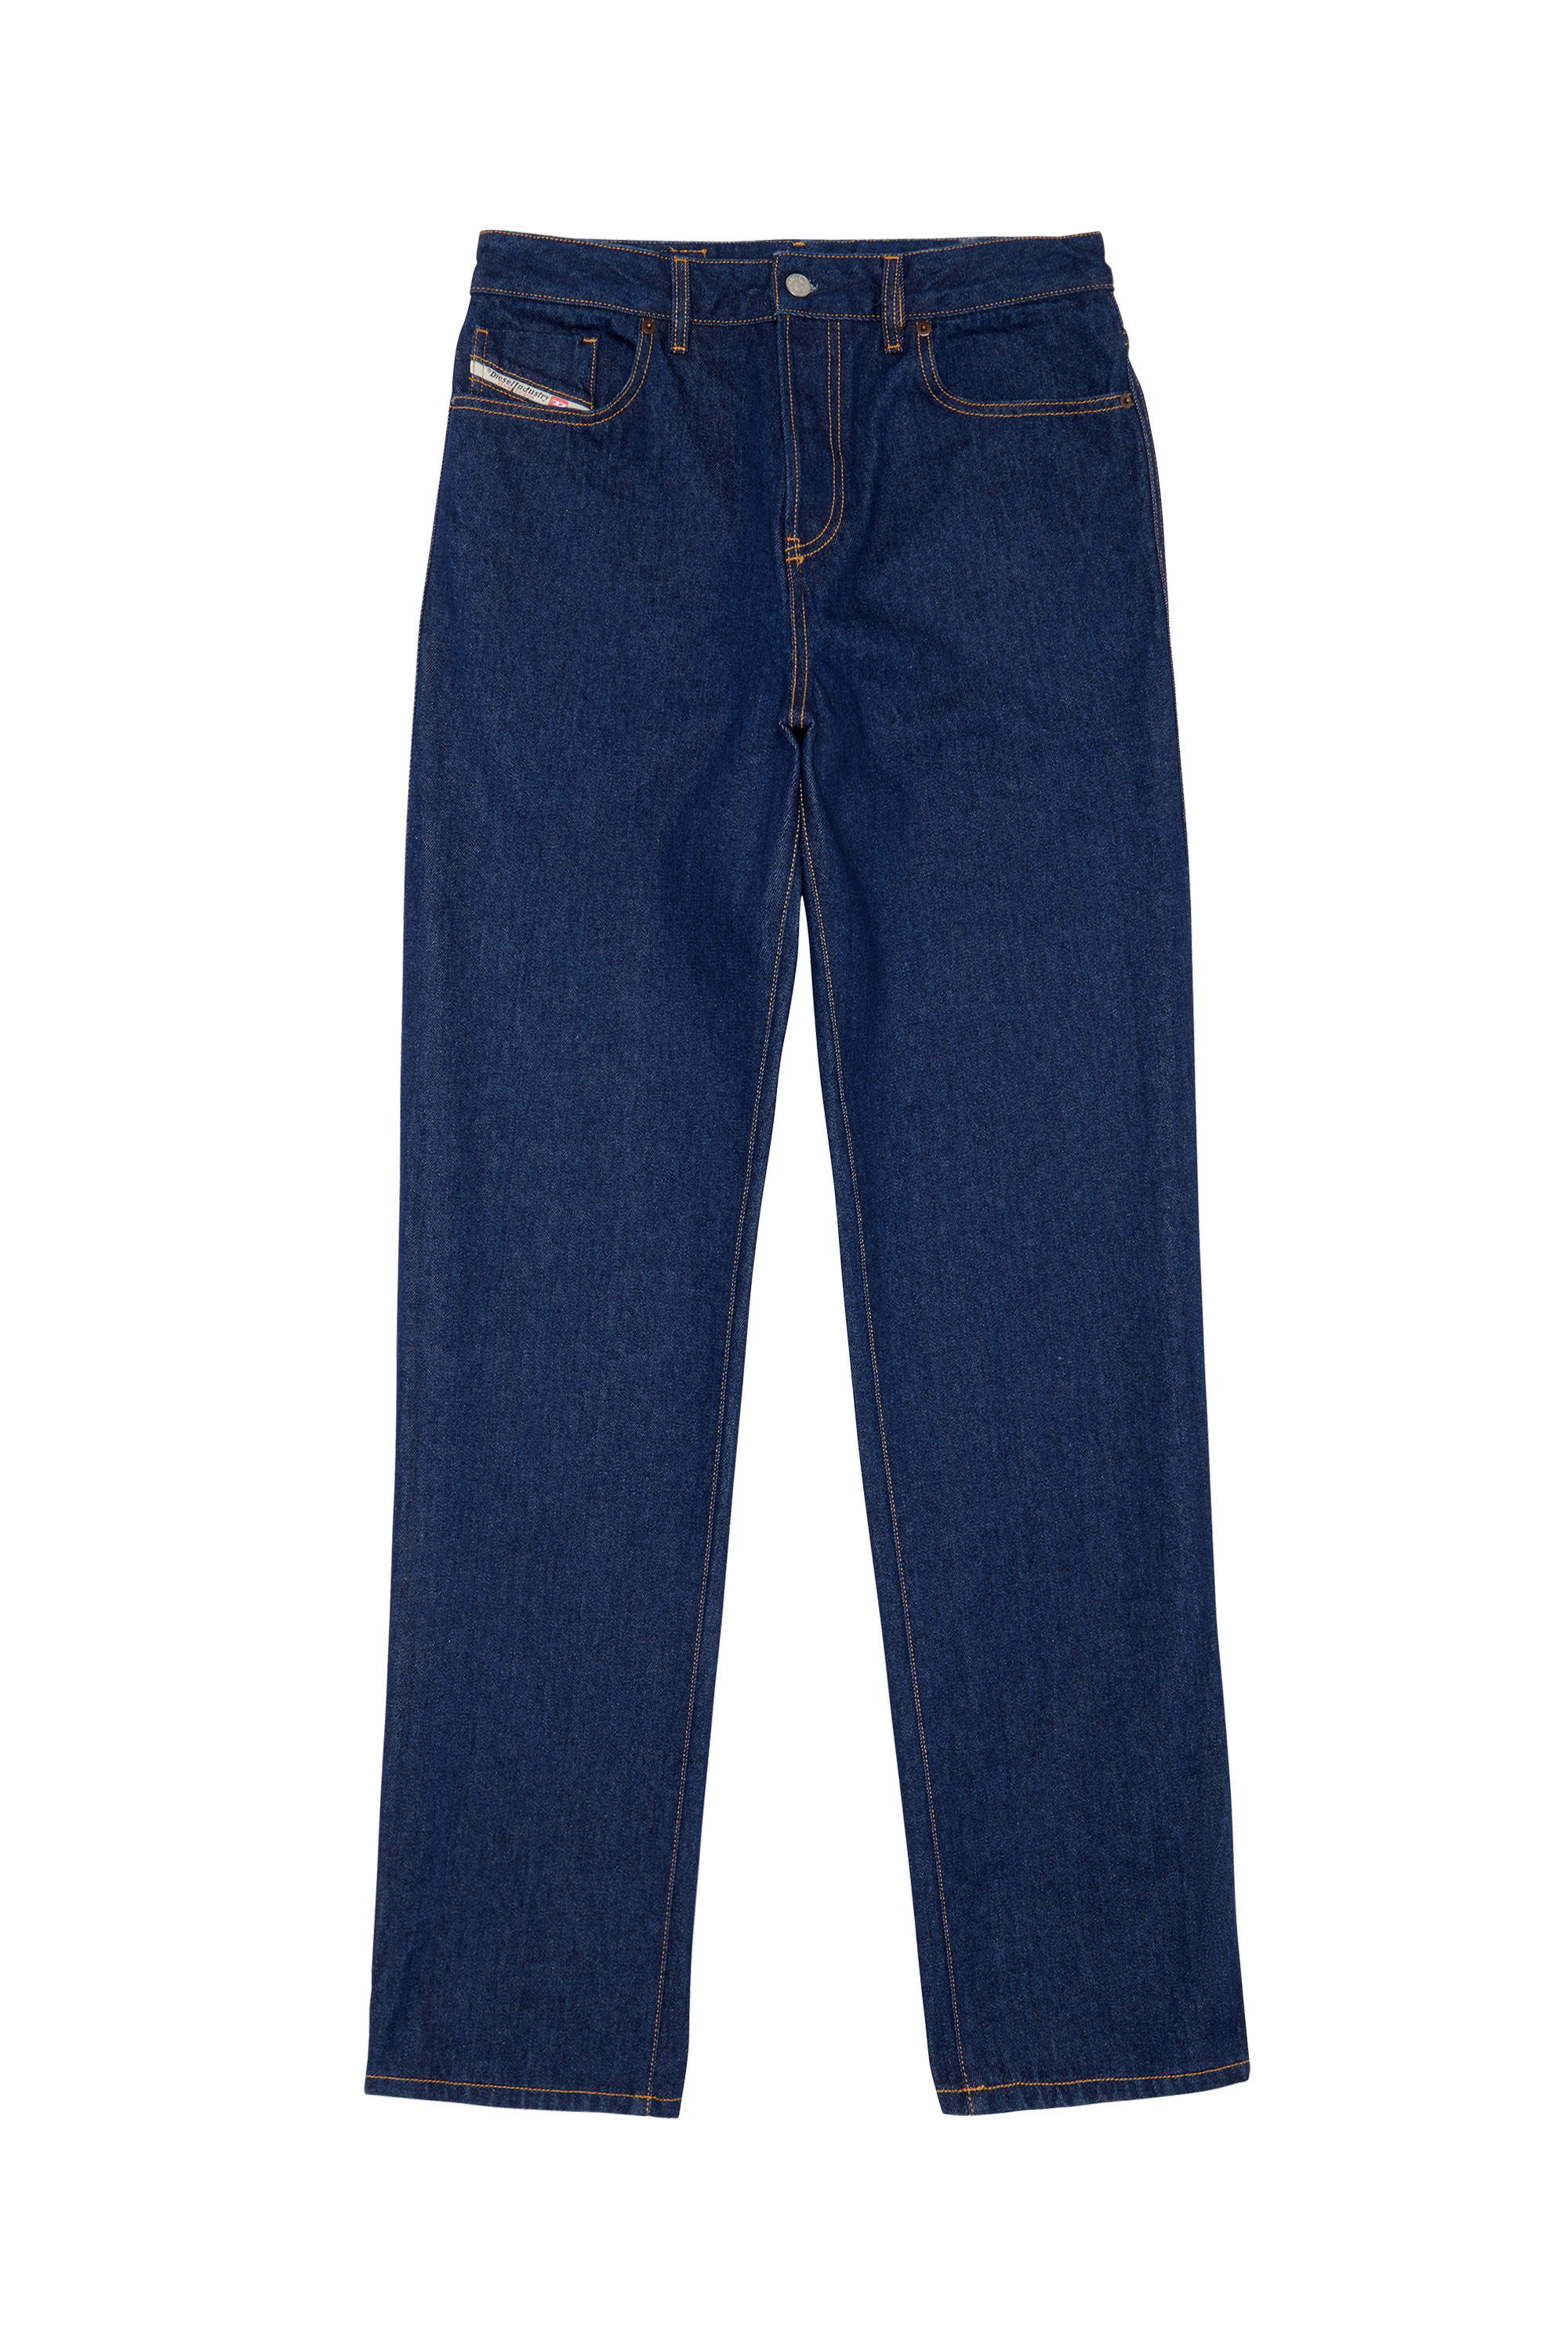 1955 D-REKIV 007A5 Straight Jeans, Dark Blue - Jeans